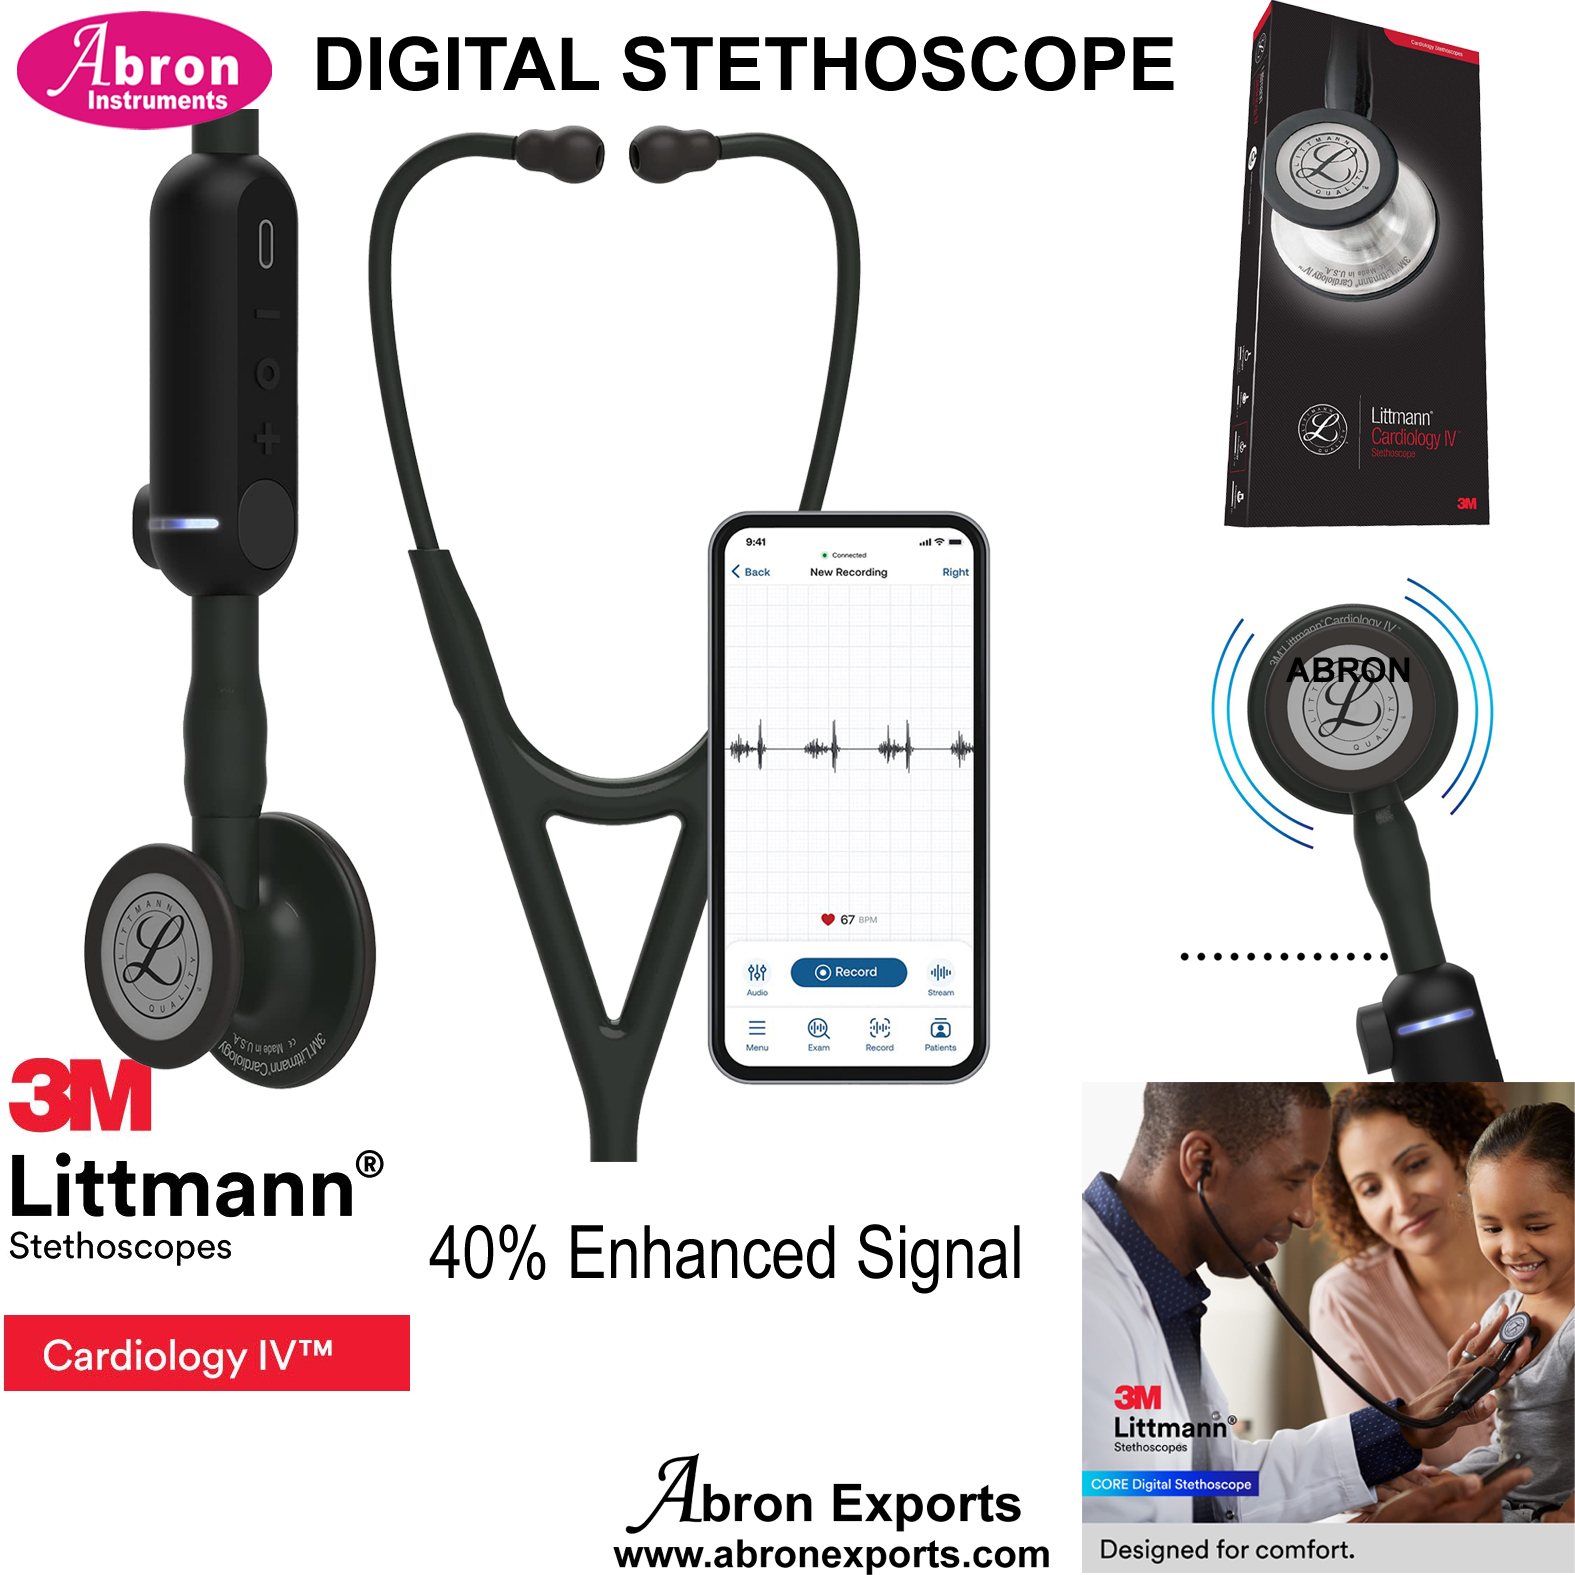 Stethoscope Cardiac Digital 3M Littmann Core Cardiac With Sensitive Chest Piece Stem Tube 27 Inch Abron AB-2751STLD 